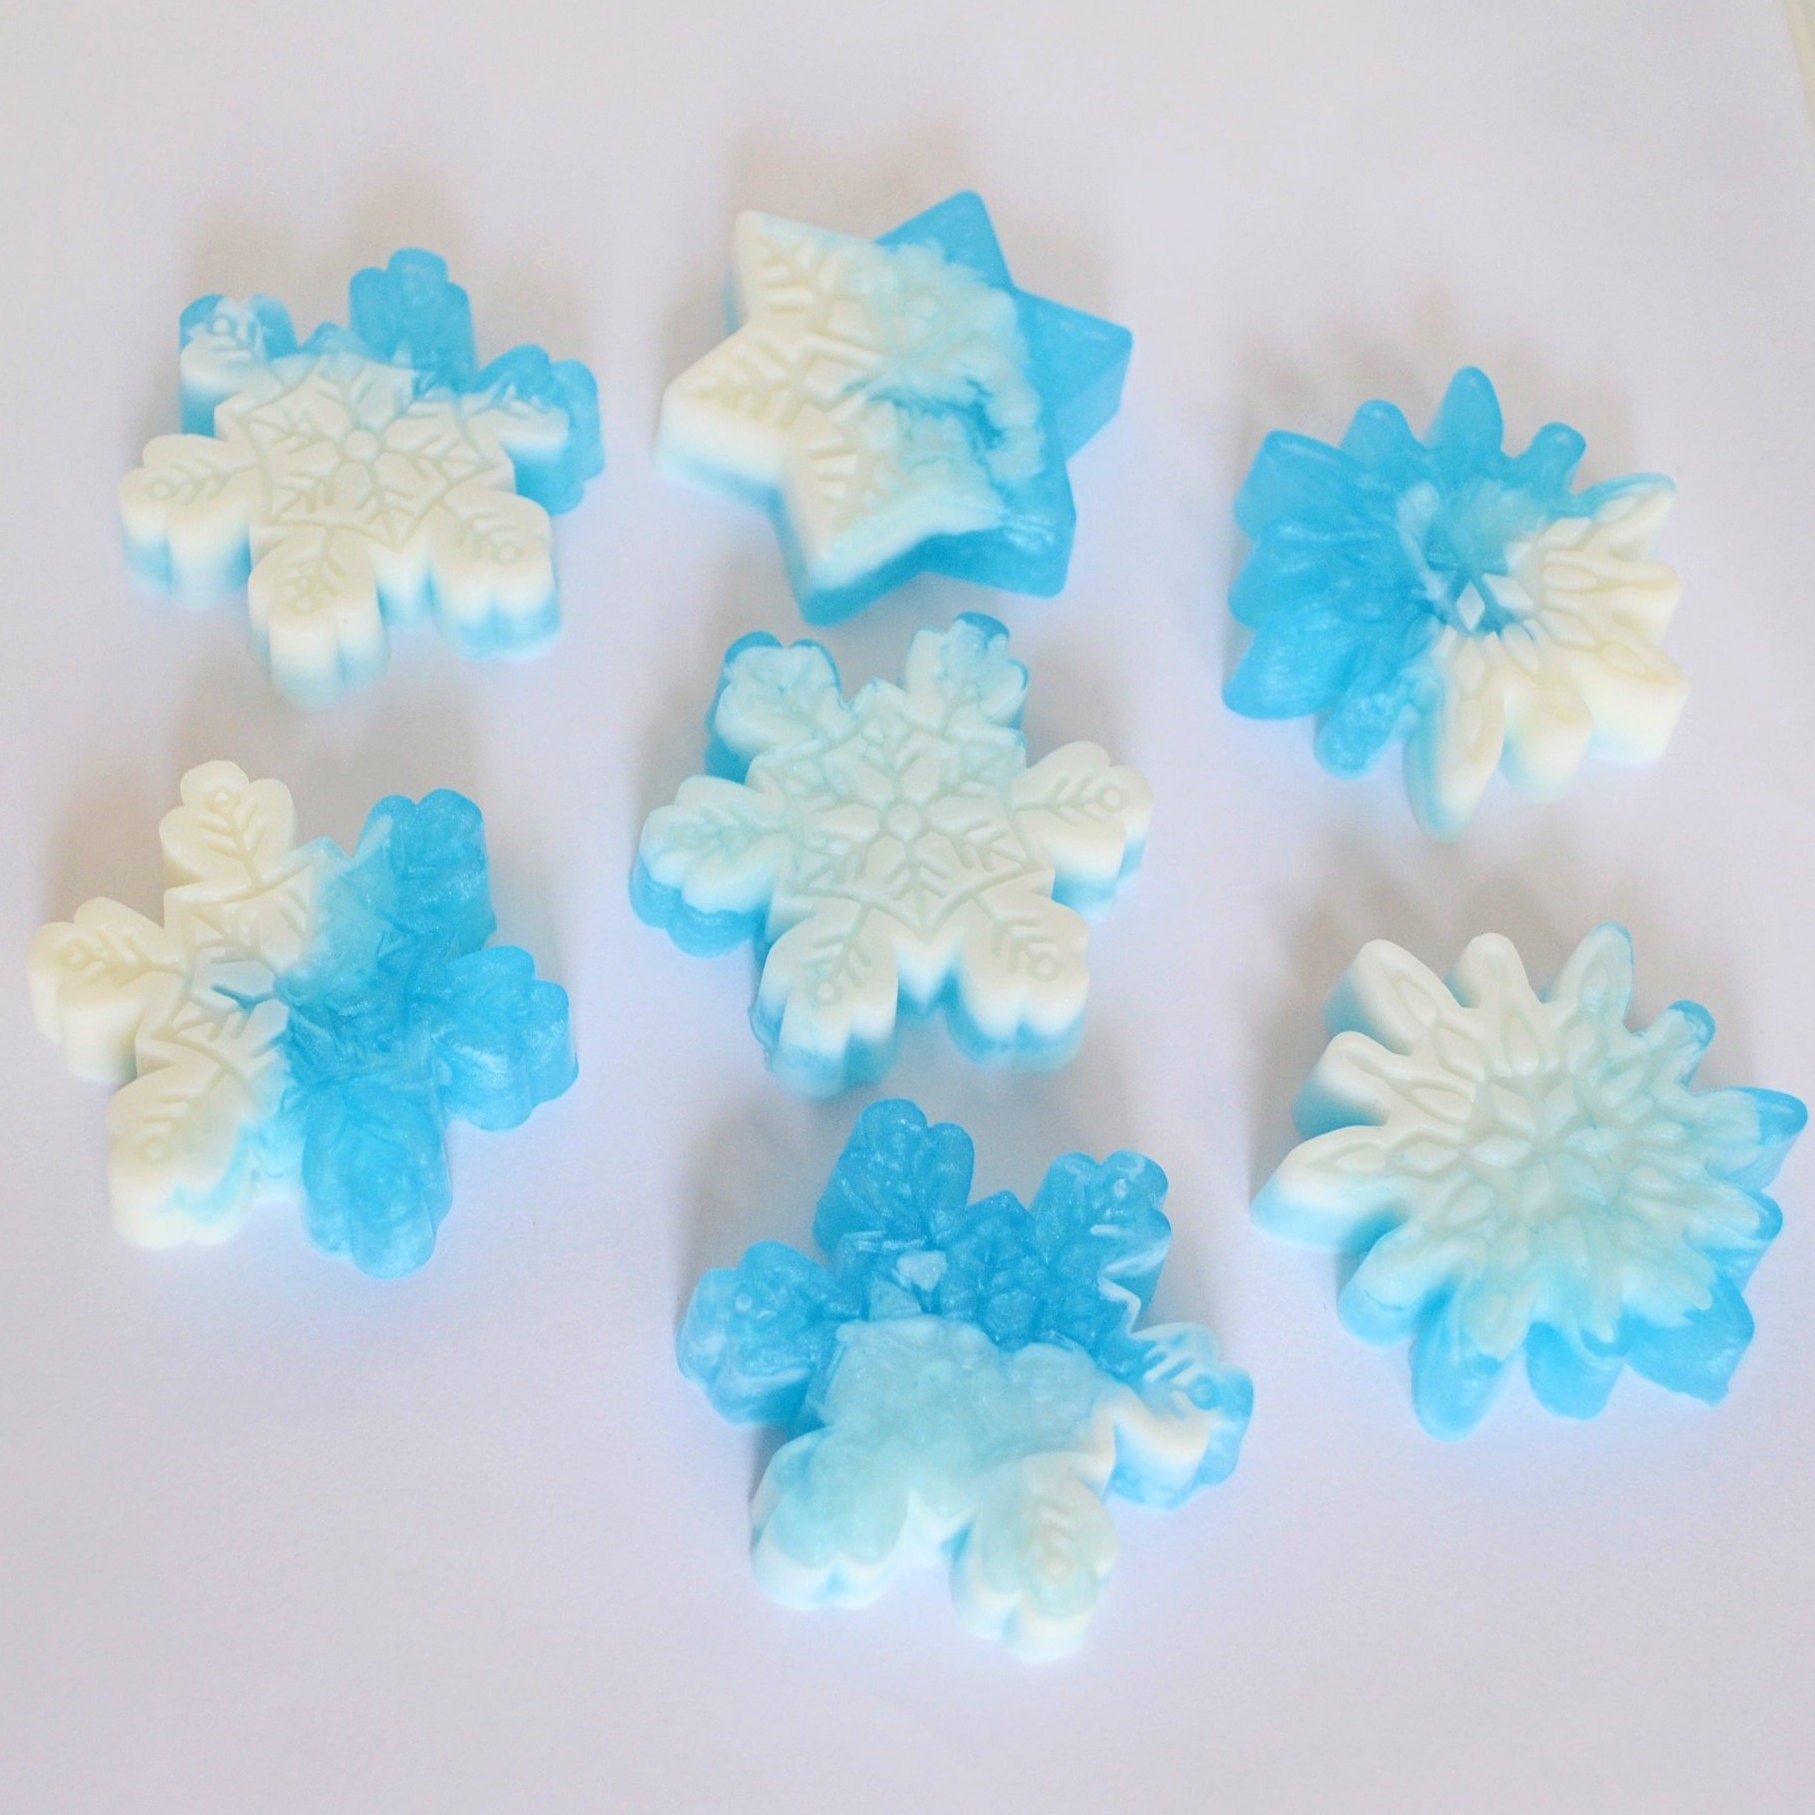 50 Snowflake Soap Favors / Soap By Nadia